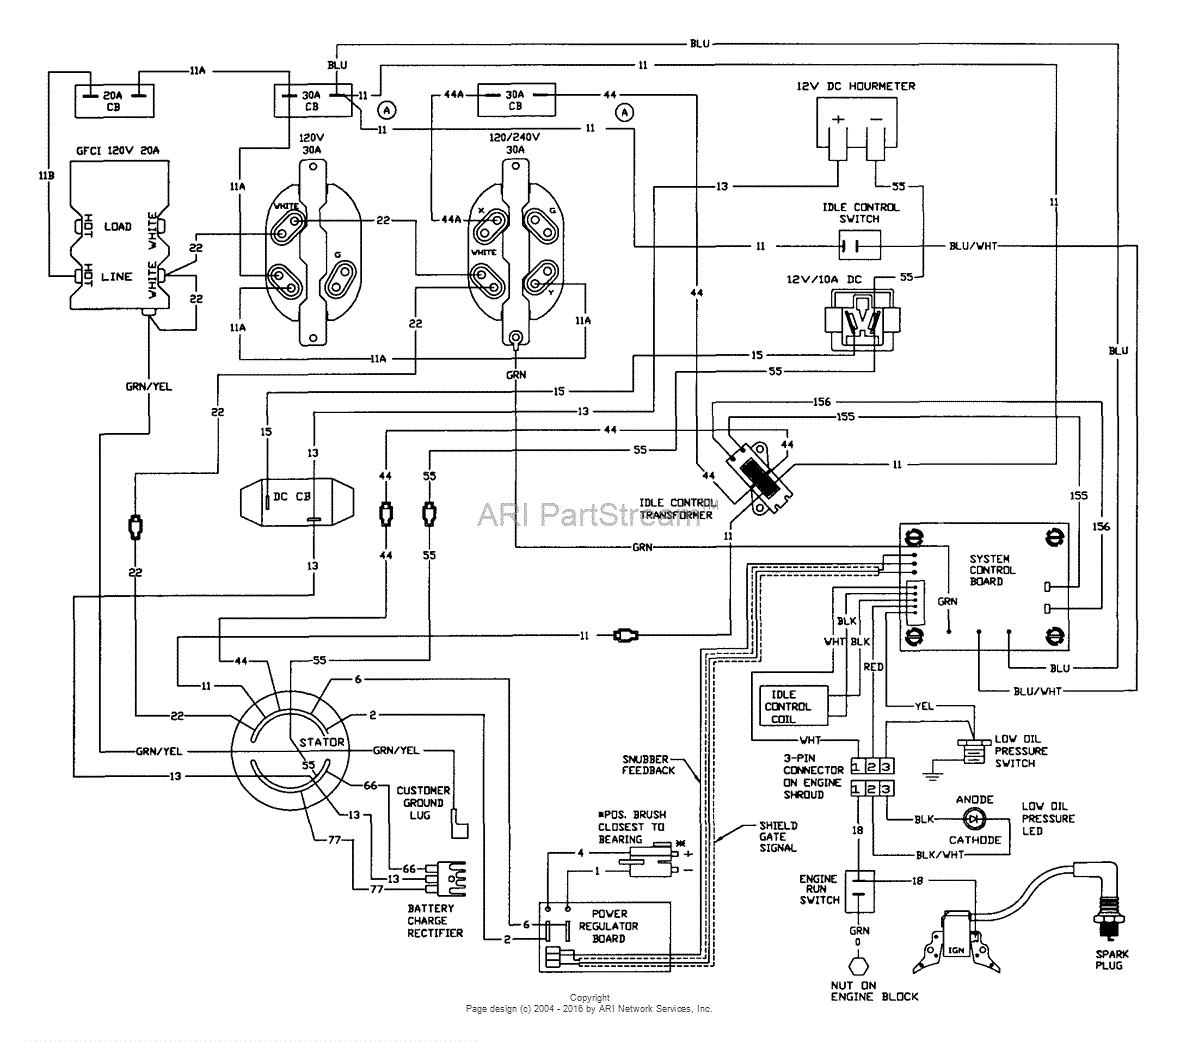 Generator Wiring Diagram And Electrical Schematics 1